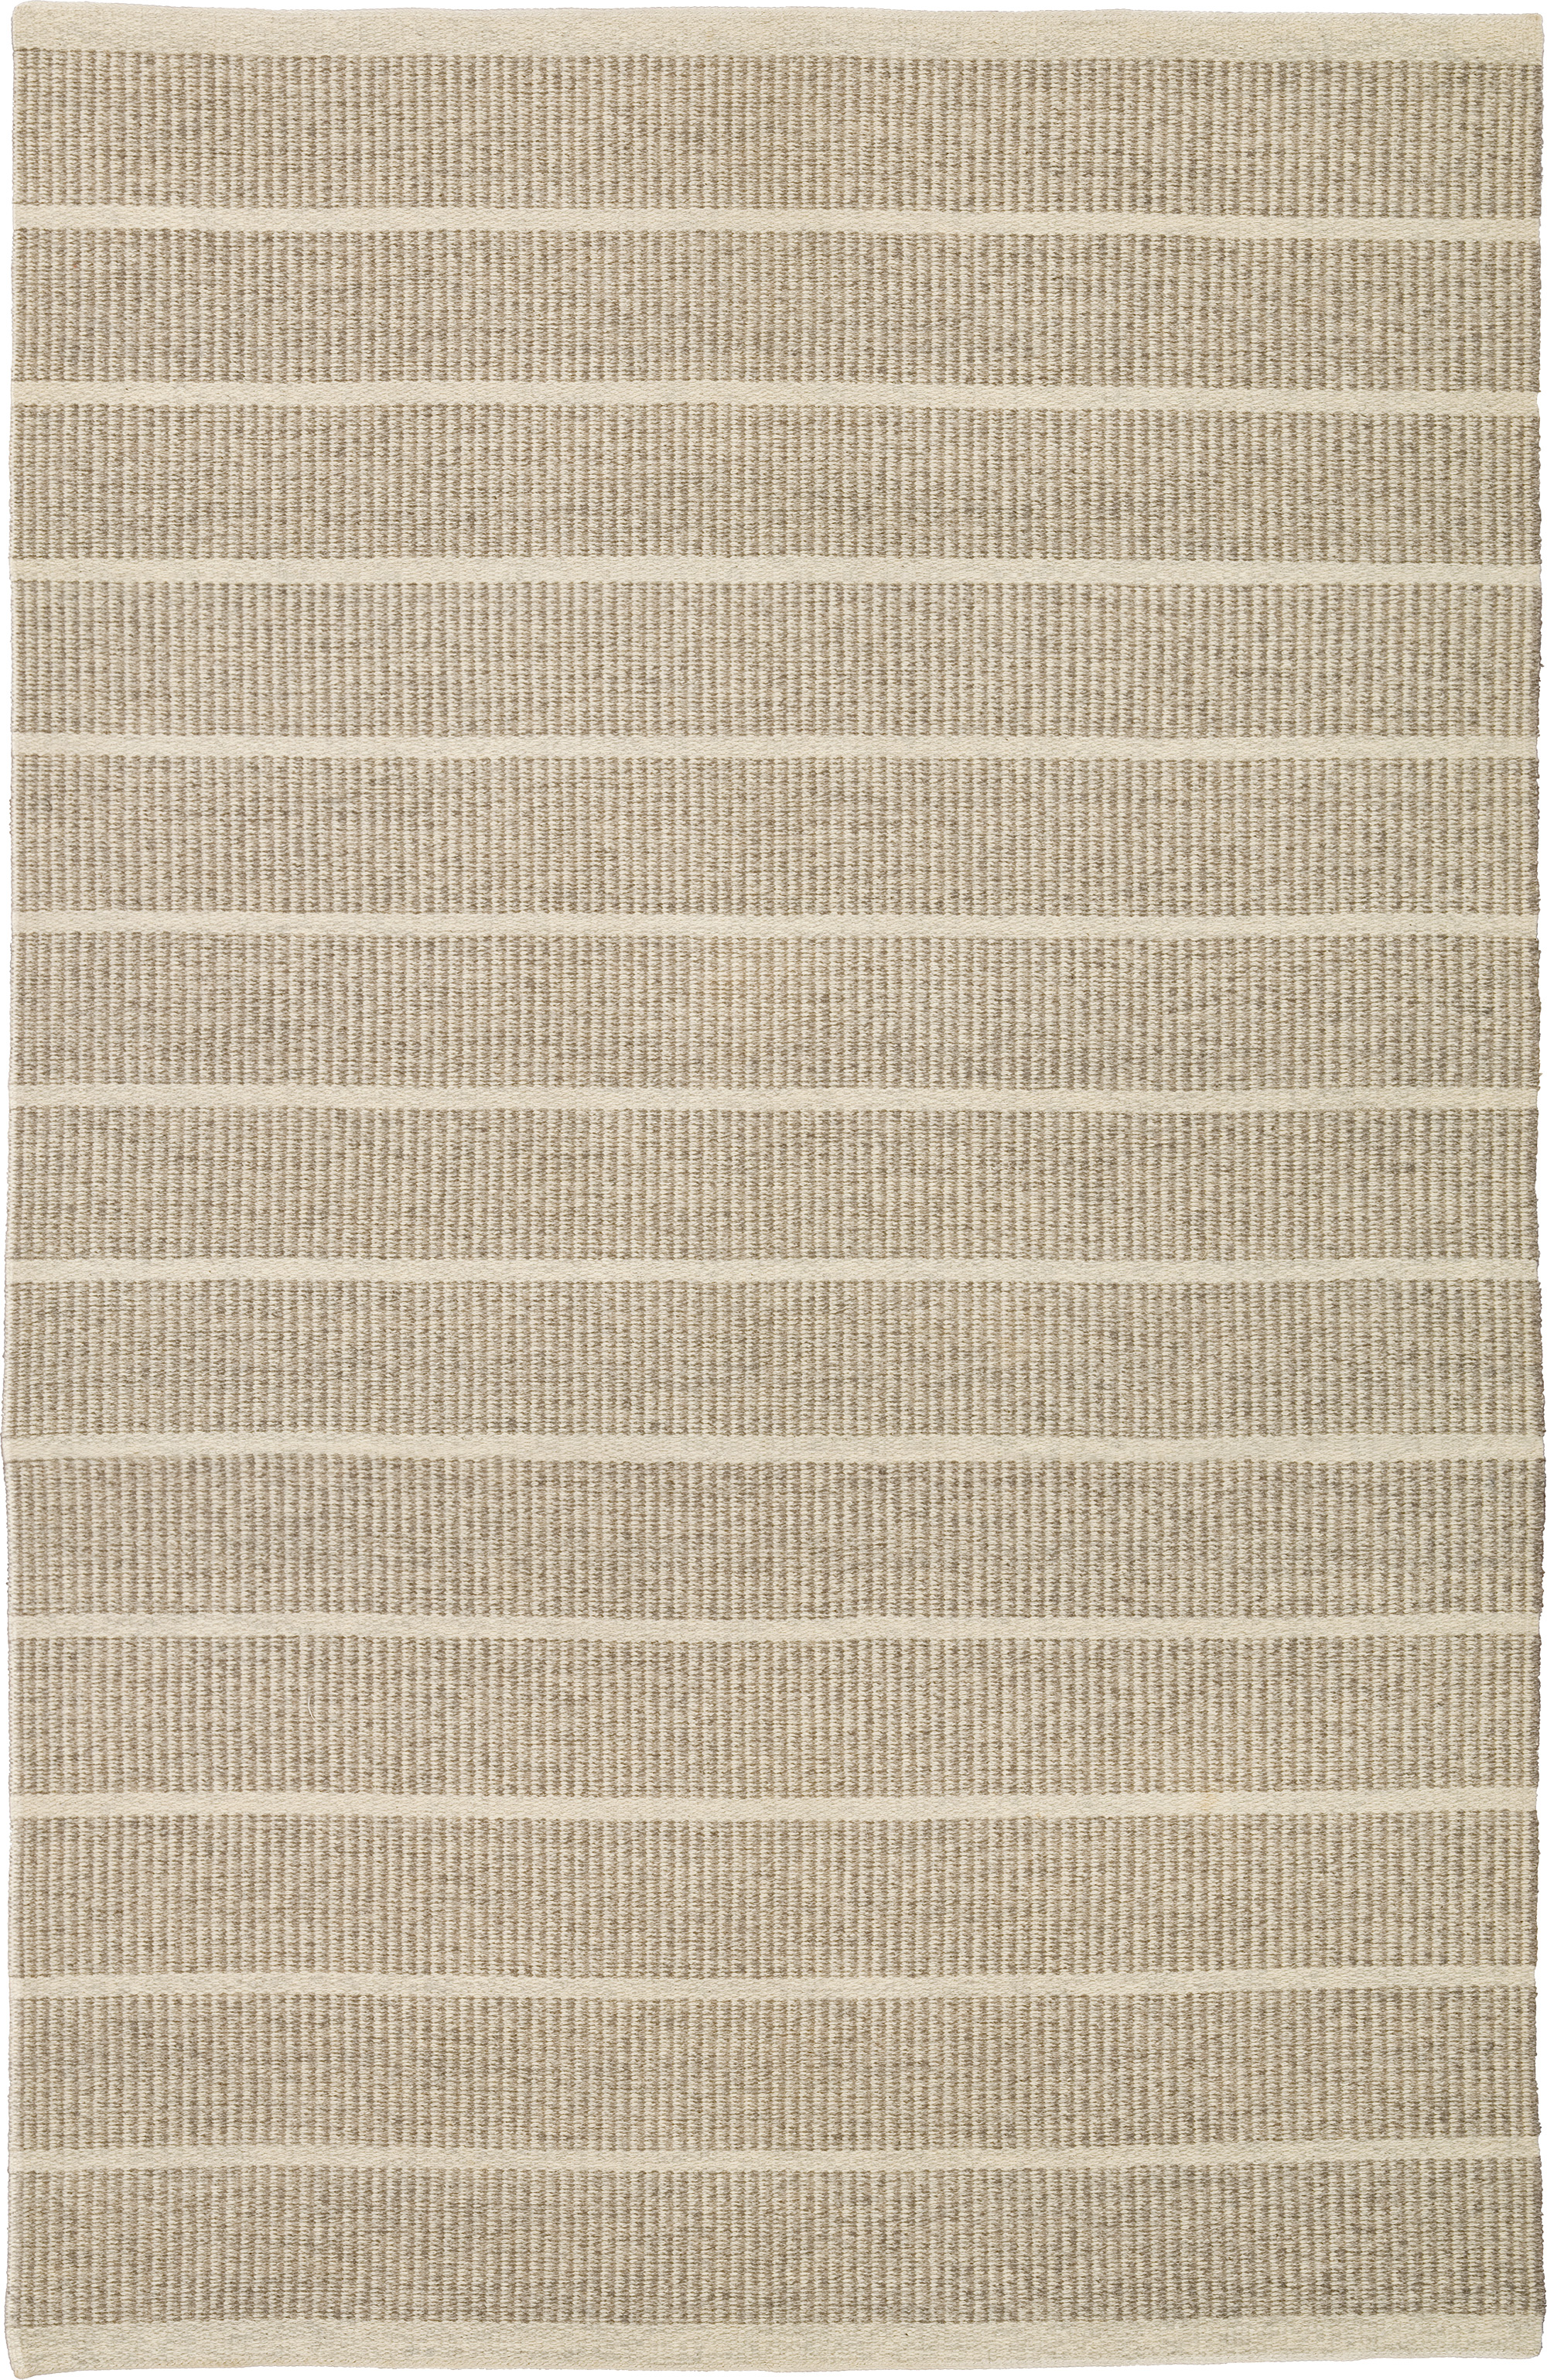 Kanaler Design | Custom Swedish Flat Weave Carpet | FJ Hakimian | Carpet Gallery in NY